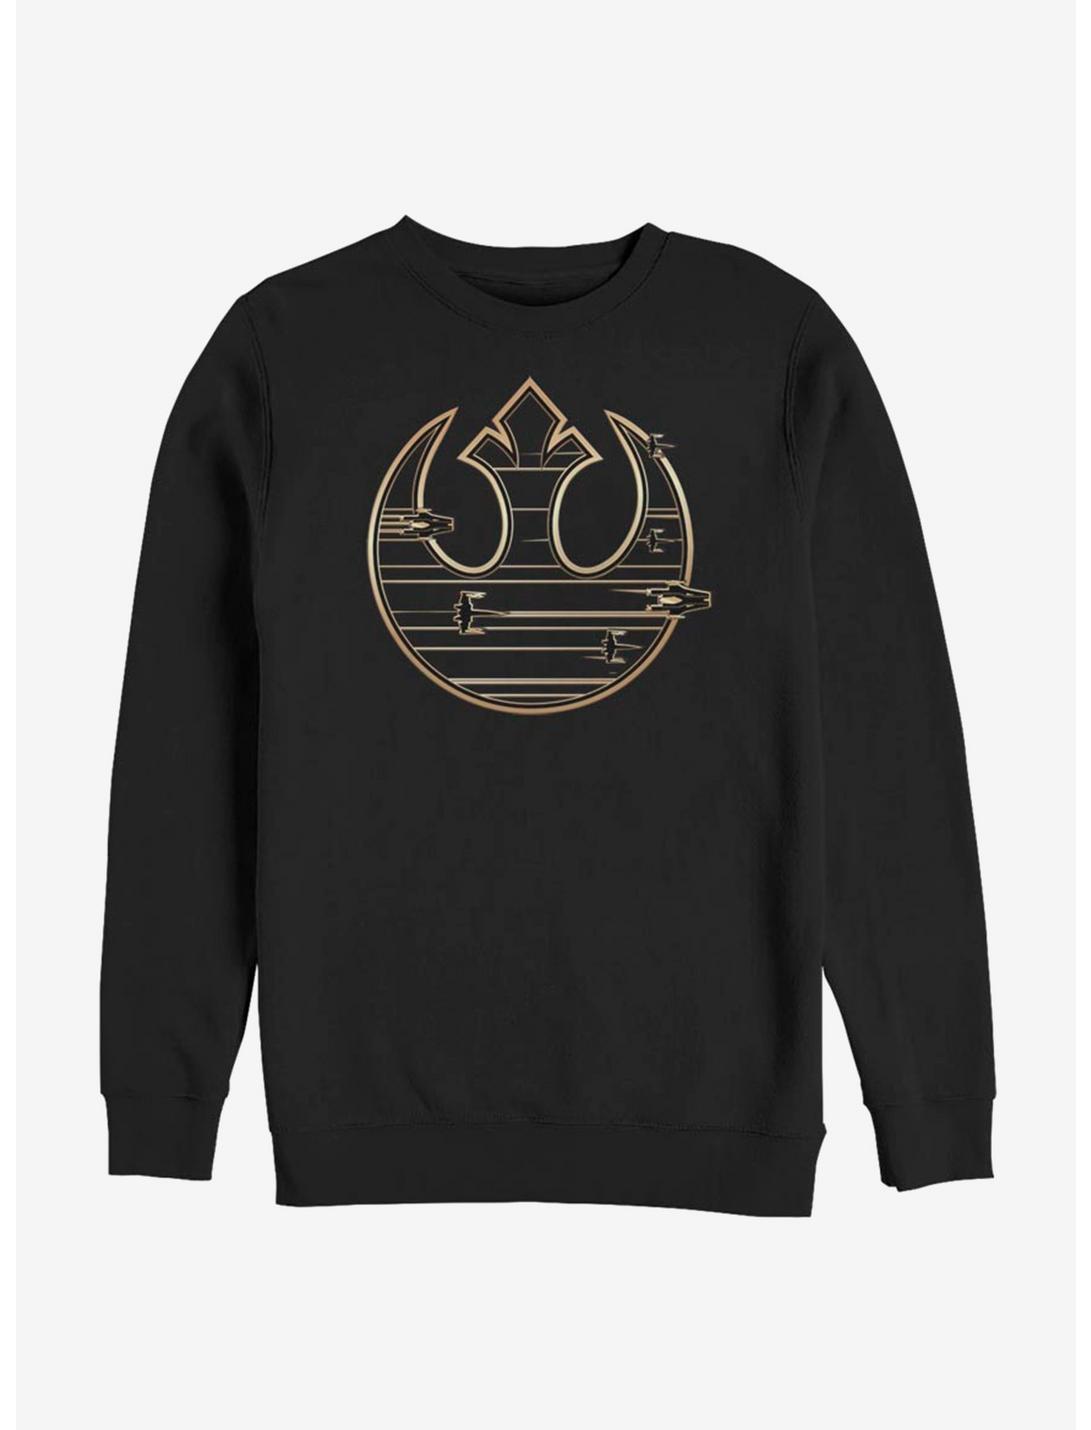 Star Wars Episode VIII The Last Jedi Gold Rebel Alliance Logo Sweatshirt, BLACK, hi-res